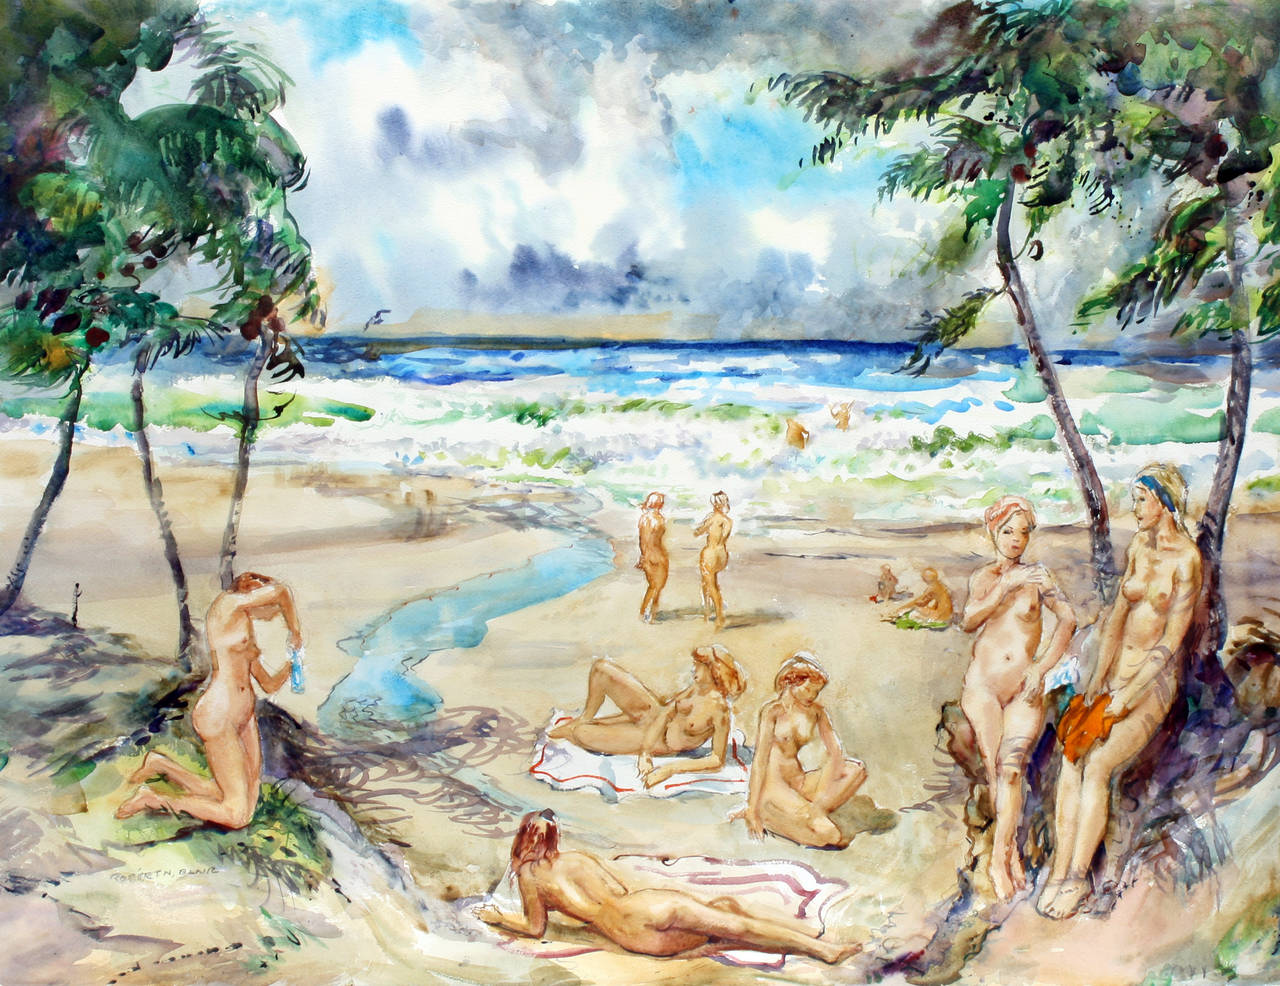 Nude Beach Virgin Islands